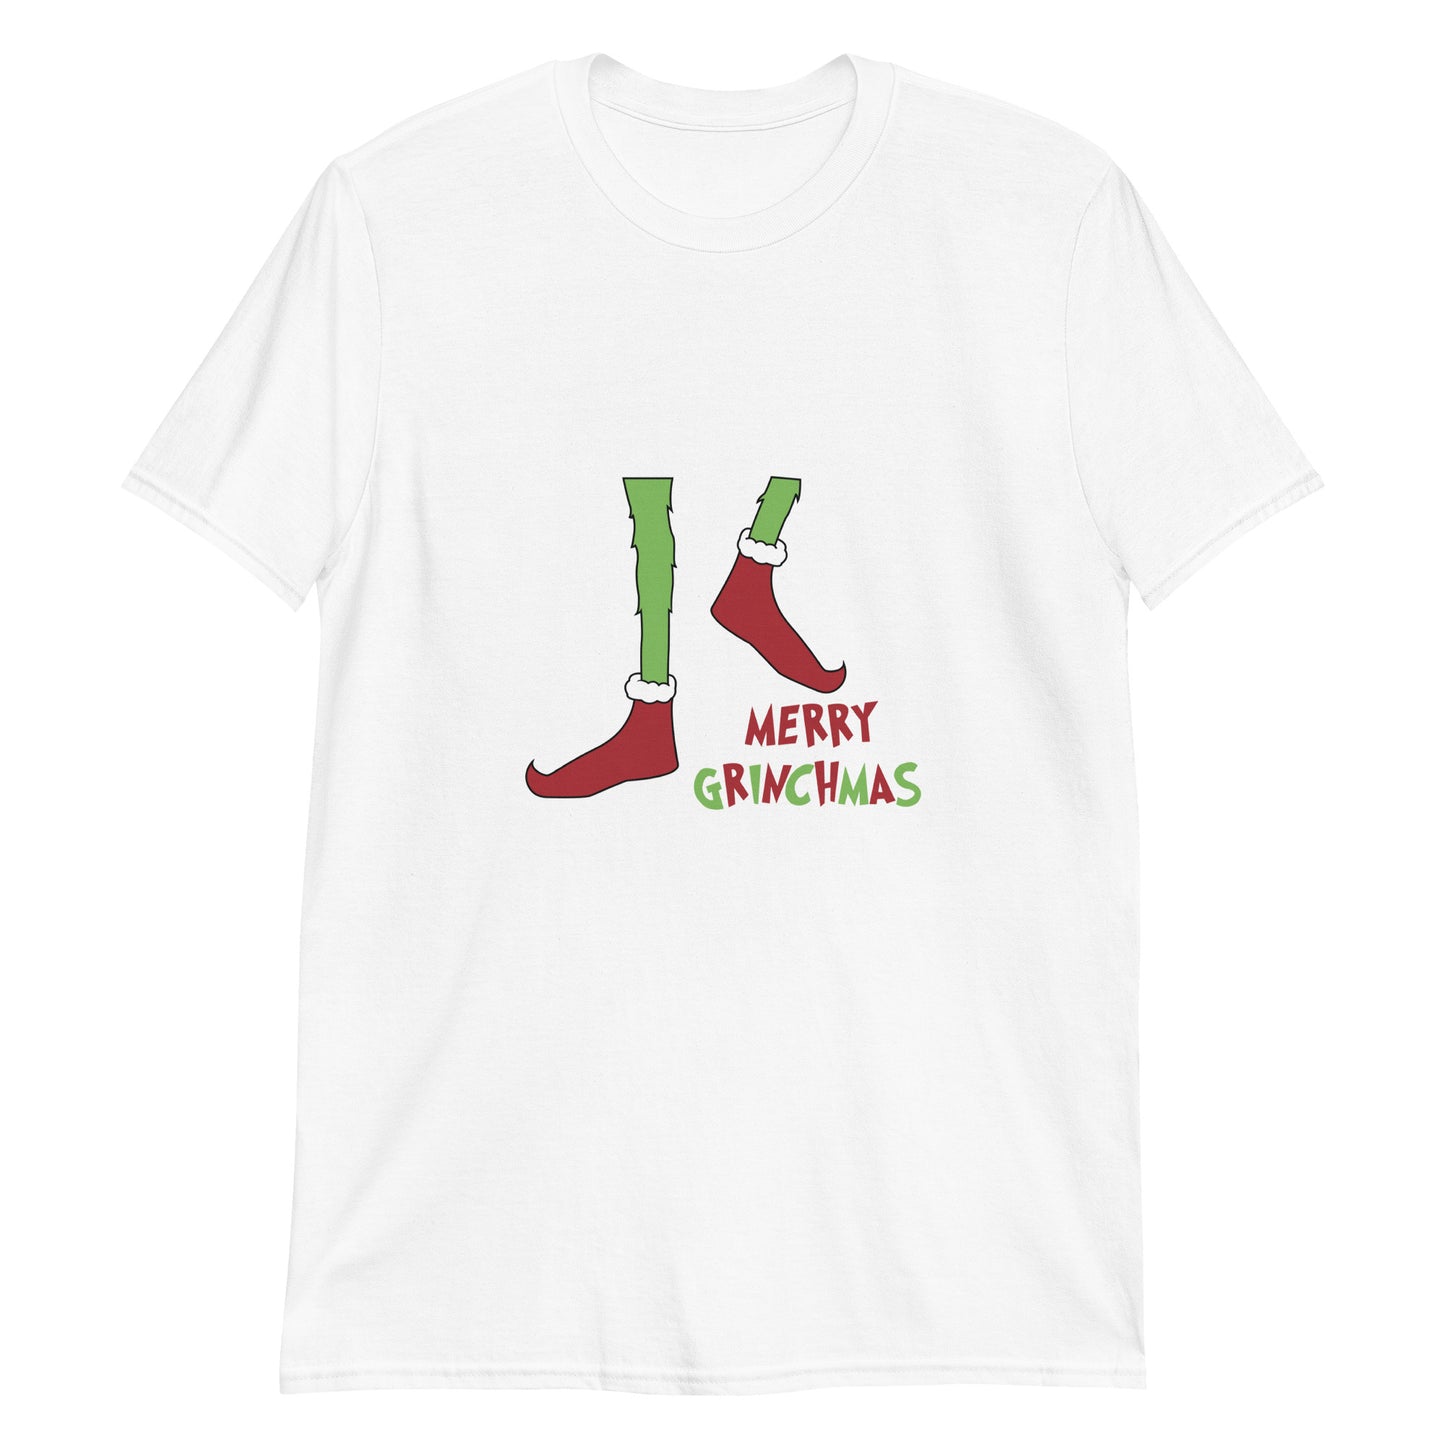 Merry Grinchmas Christmas T-Shirt